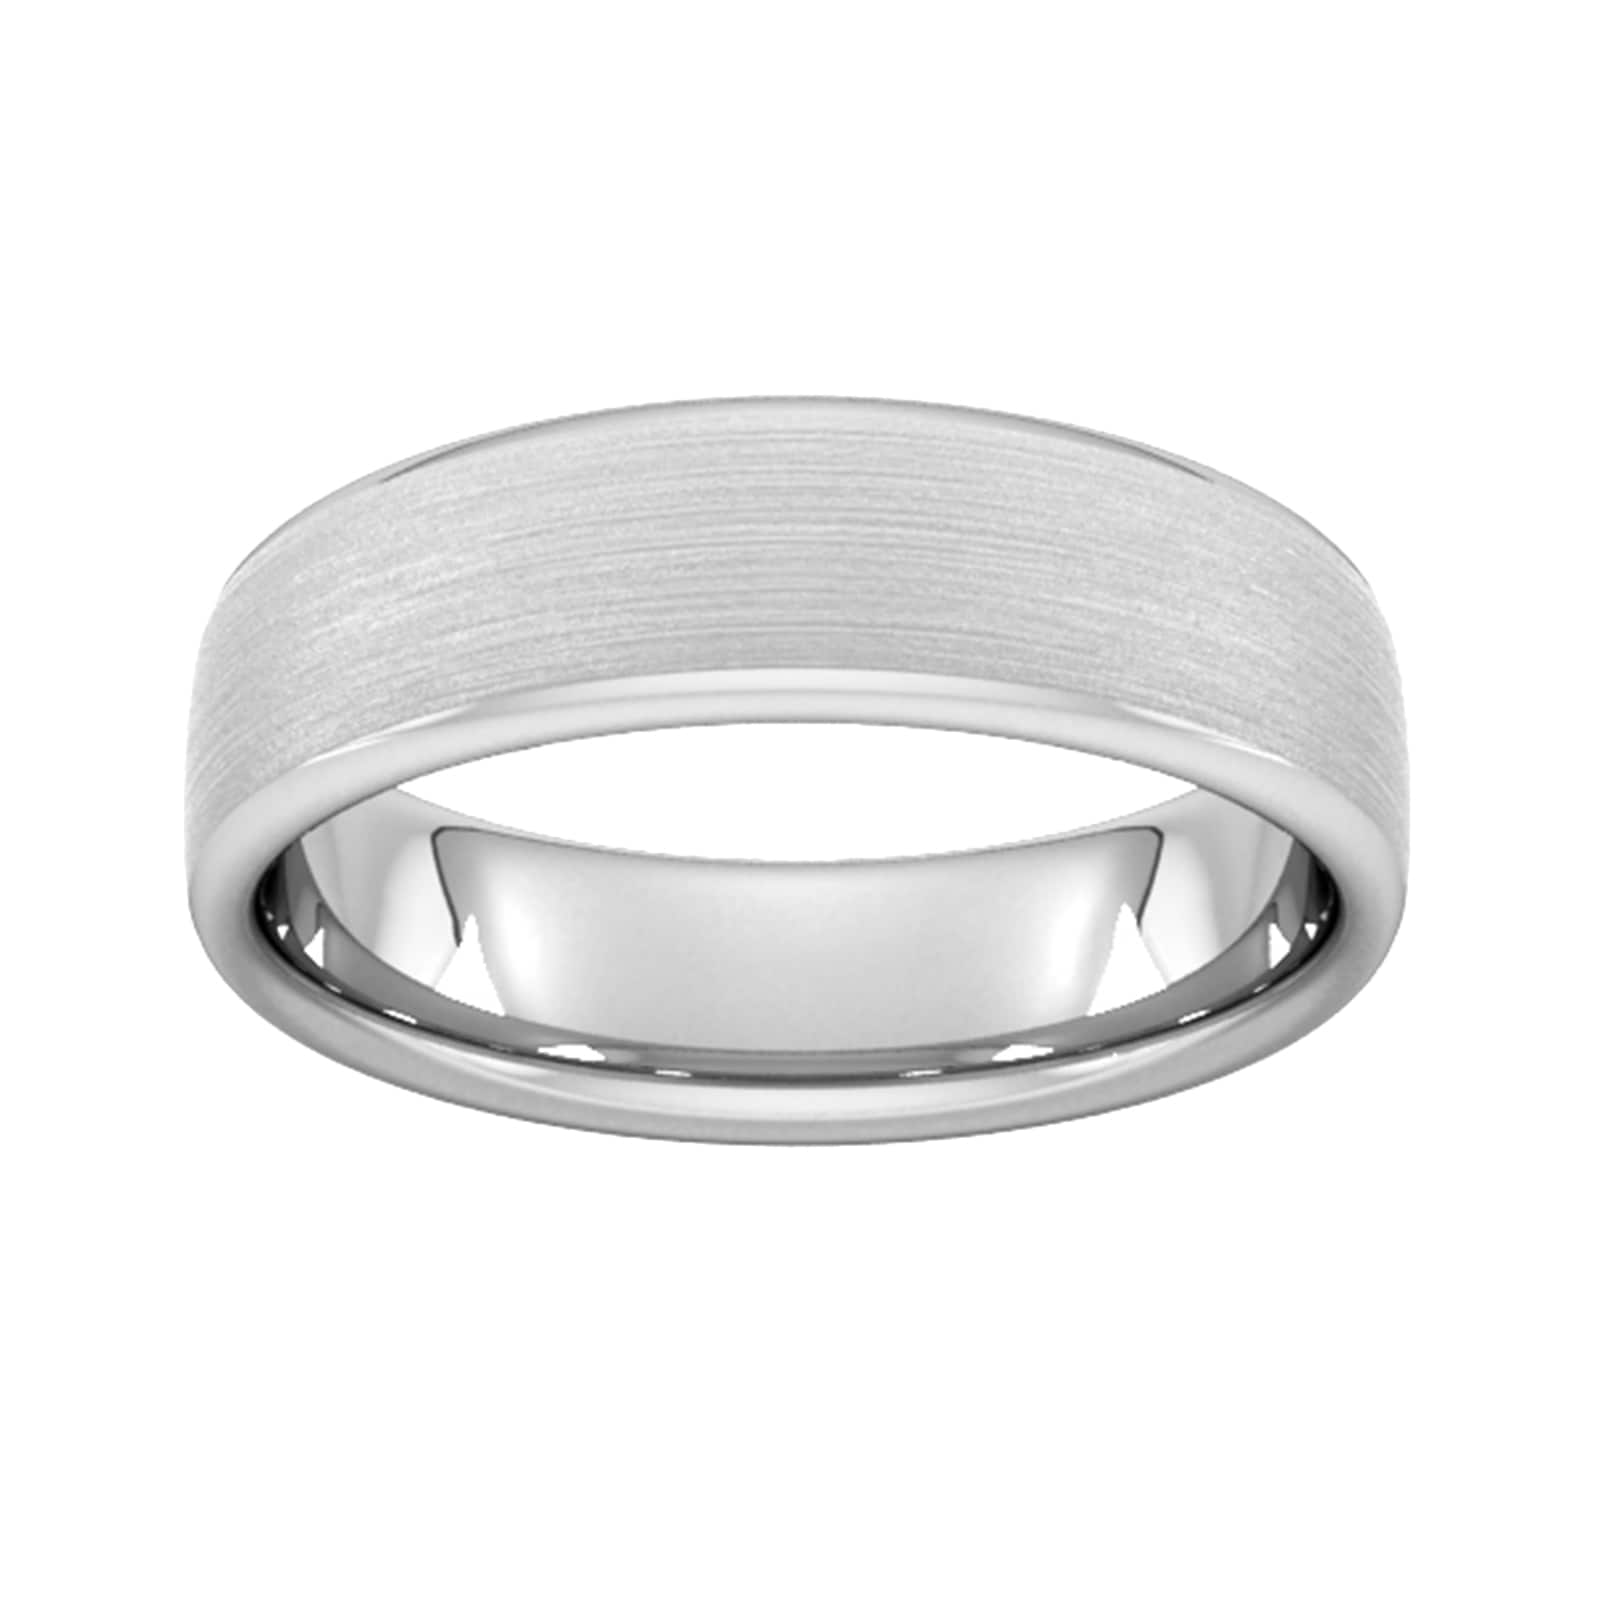 6mm D Shape Heavy Matt Finished Wedding Ring In 950 Palladium - Ring Size O